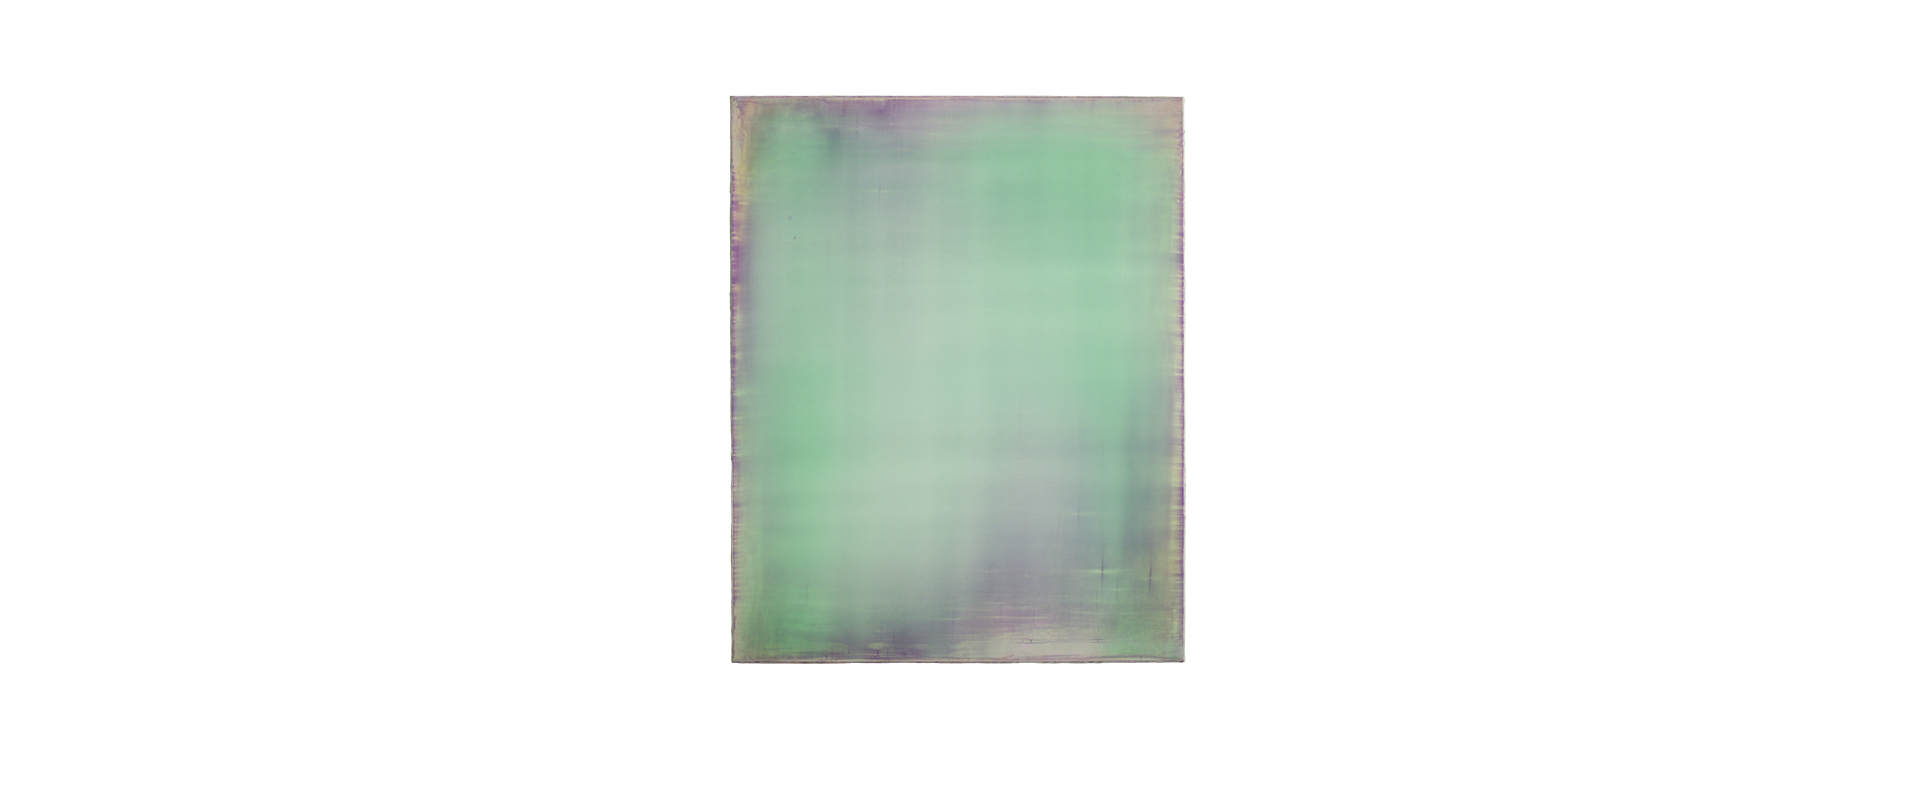 20211121 – 2021, Acryl auf Leinwand, 100 x 80 cm